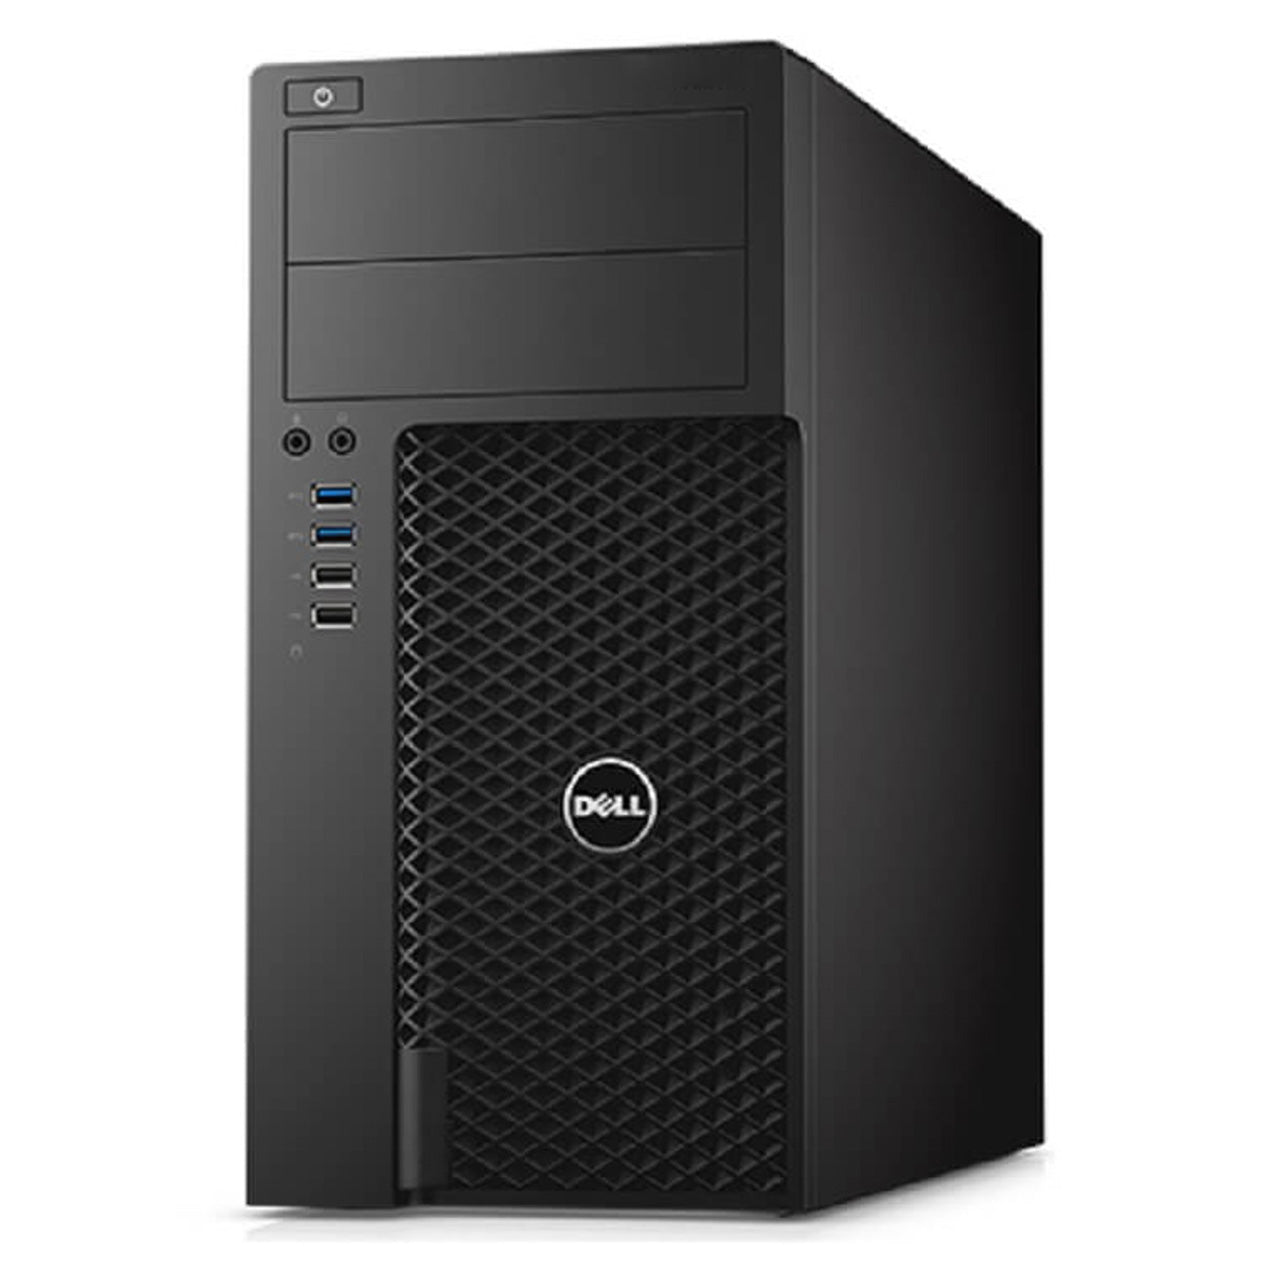 Dell Precision T1700 Tower Desktop Computer PC| Intel Core i5 - (4570) 4th Gen, Intel Core i7 - (4770) 4th Gen| 8GB - 32GB DDR3 RAM| 256GB -2TB SSD| Windows 10 Pro|  - Refurbished